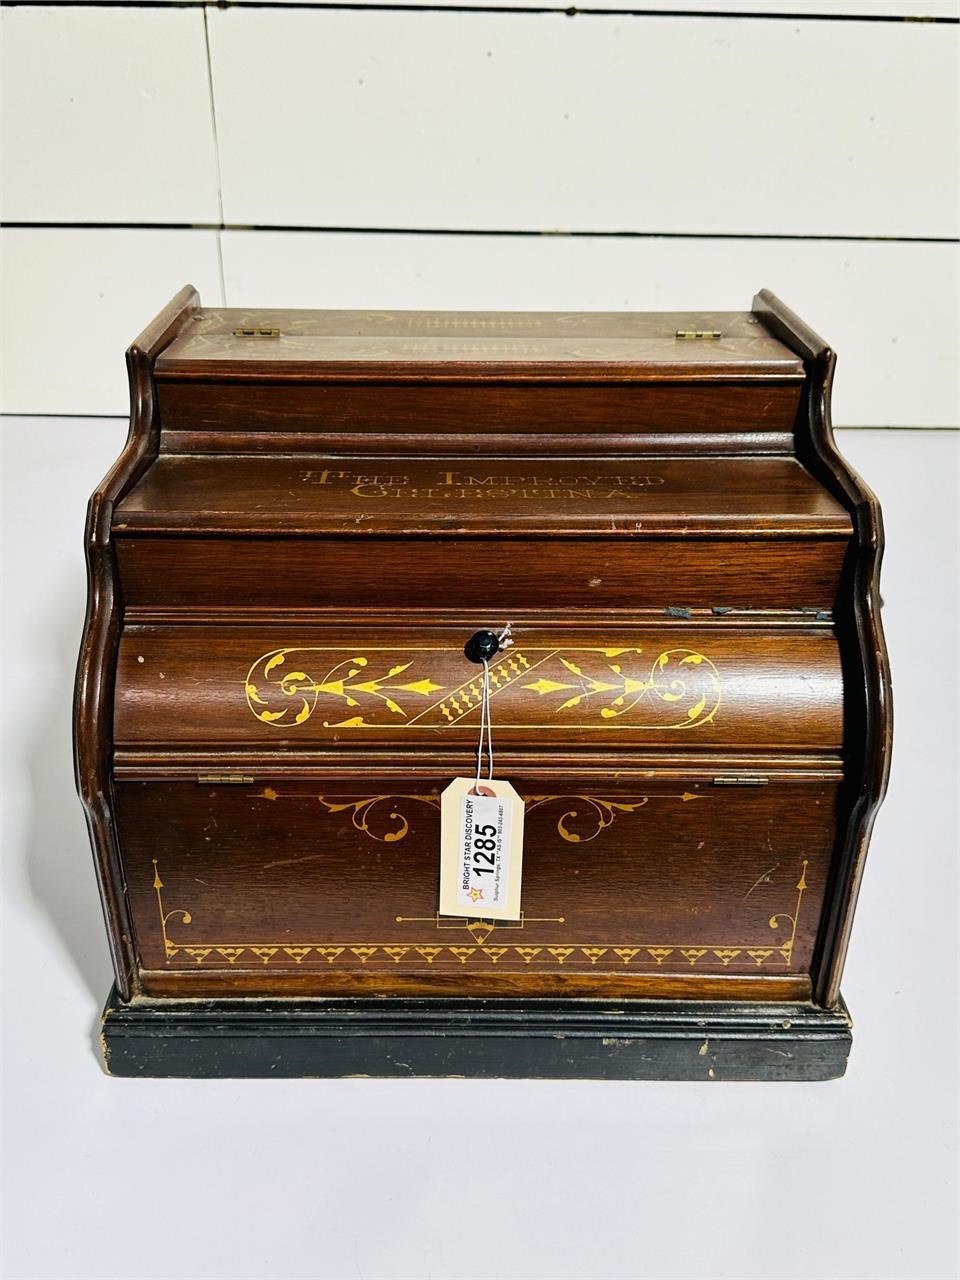 Antique "The Improved Celestina" Organ